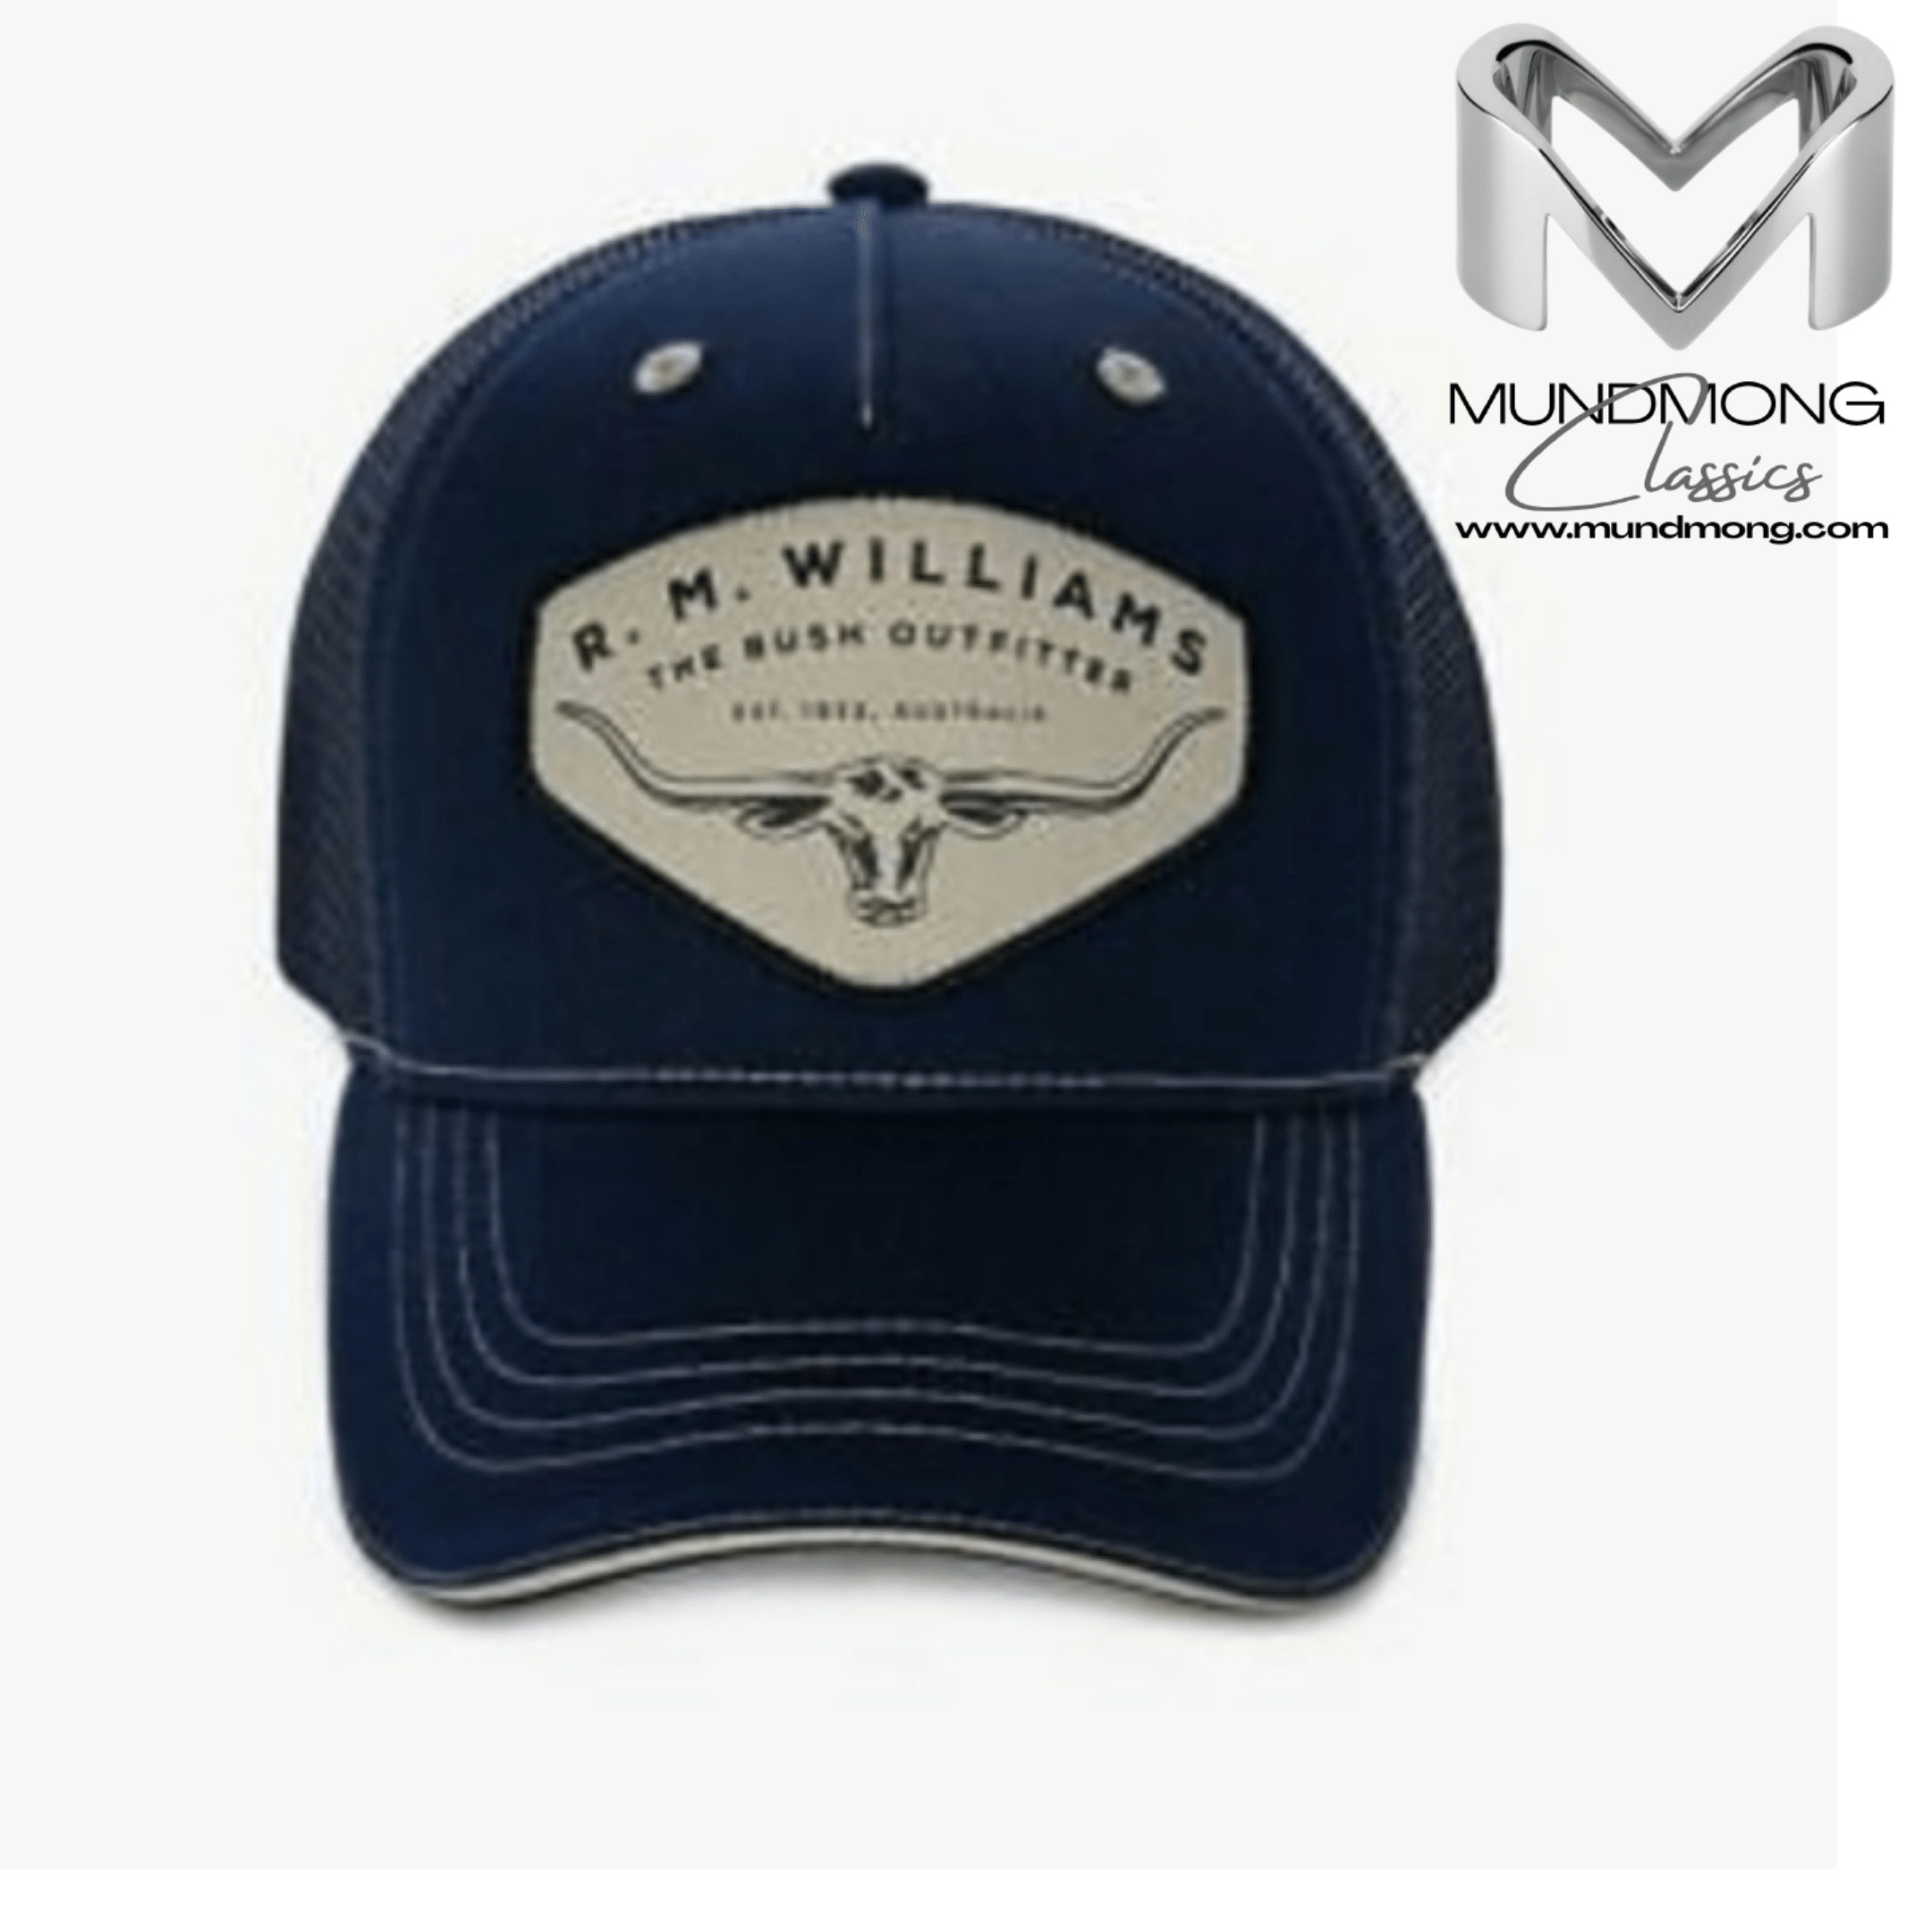 rm williams hat